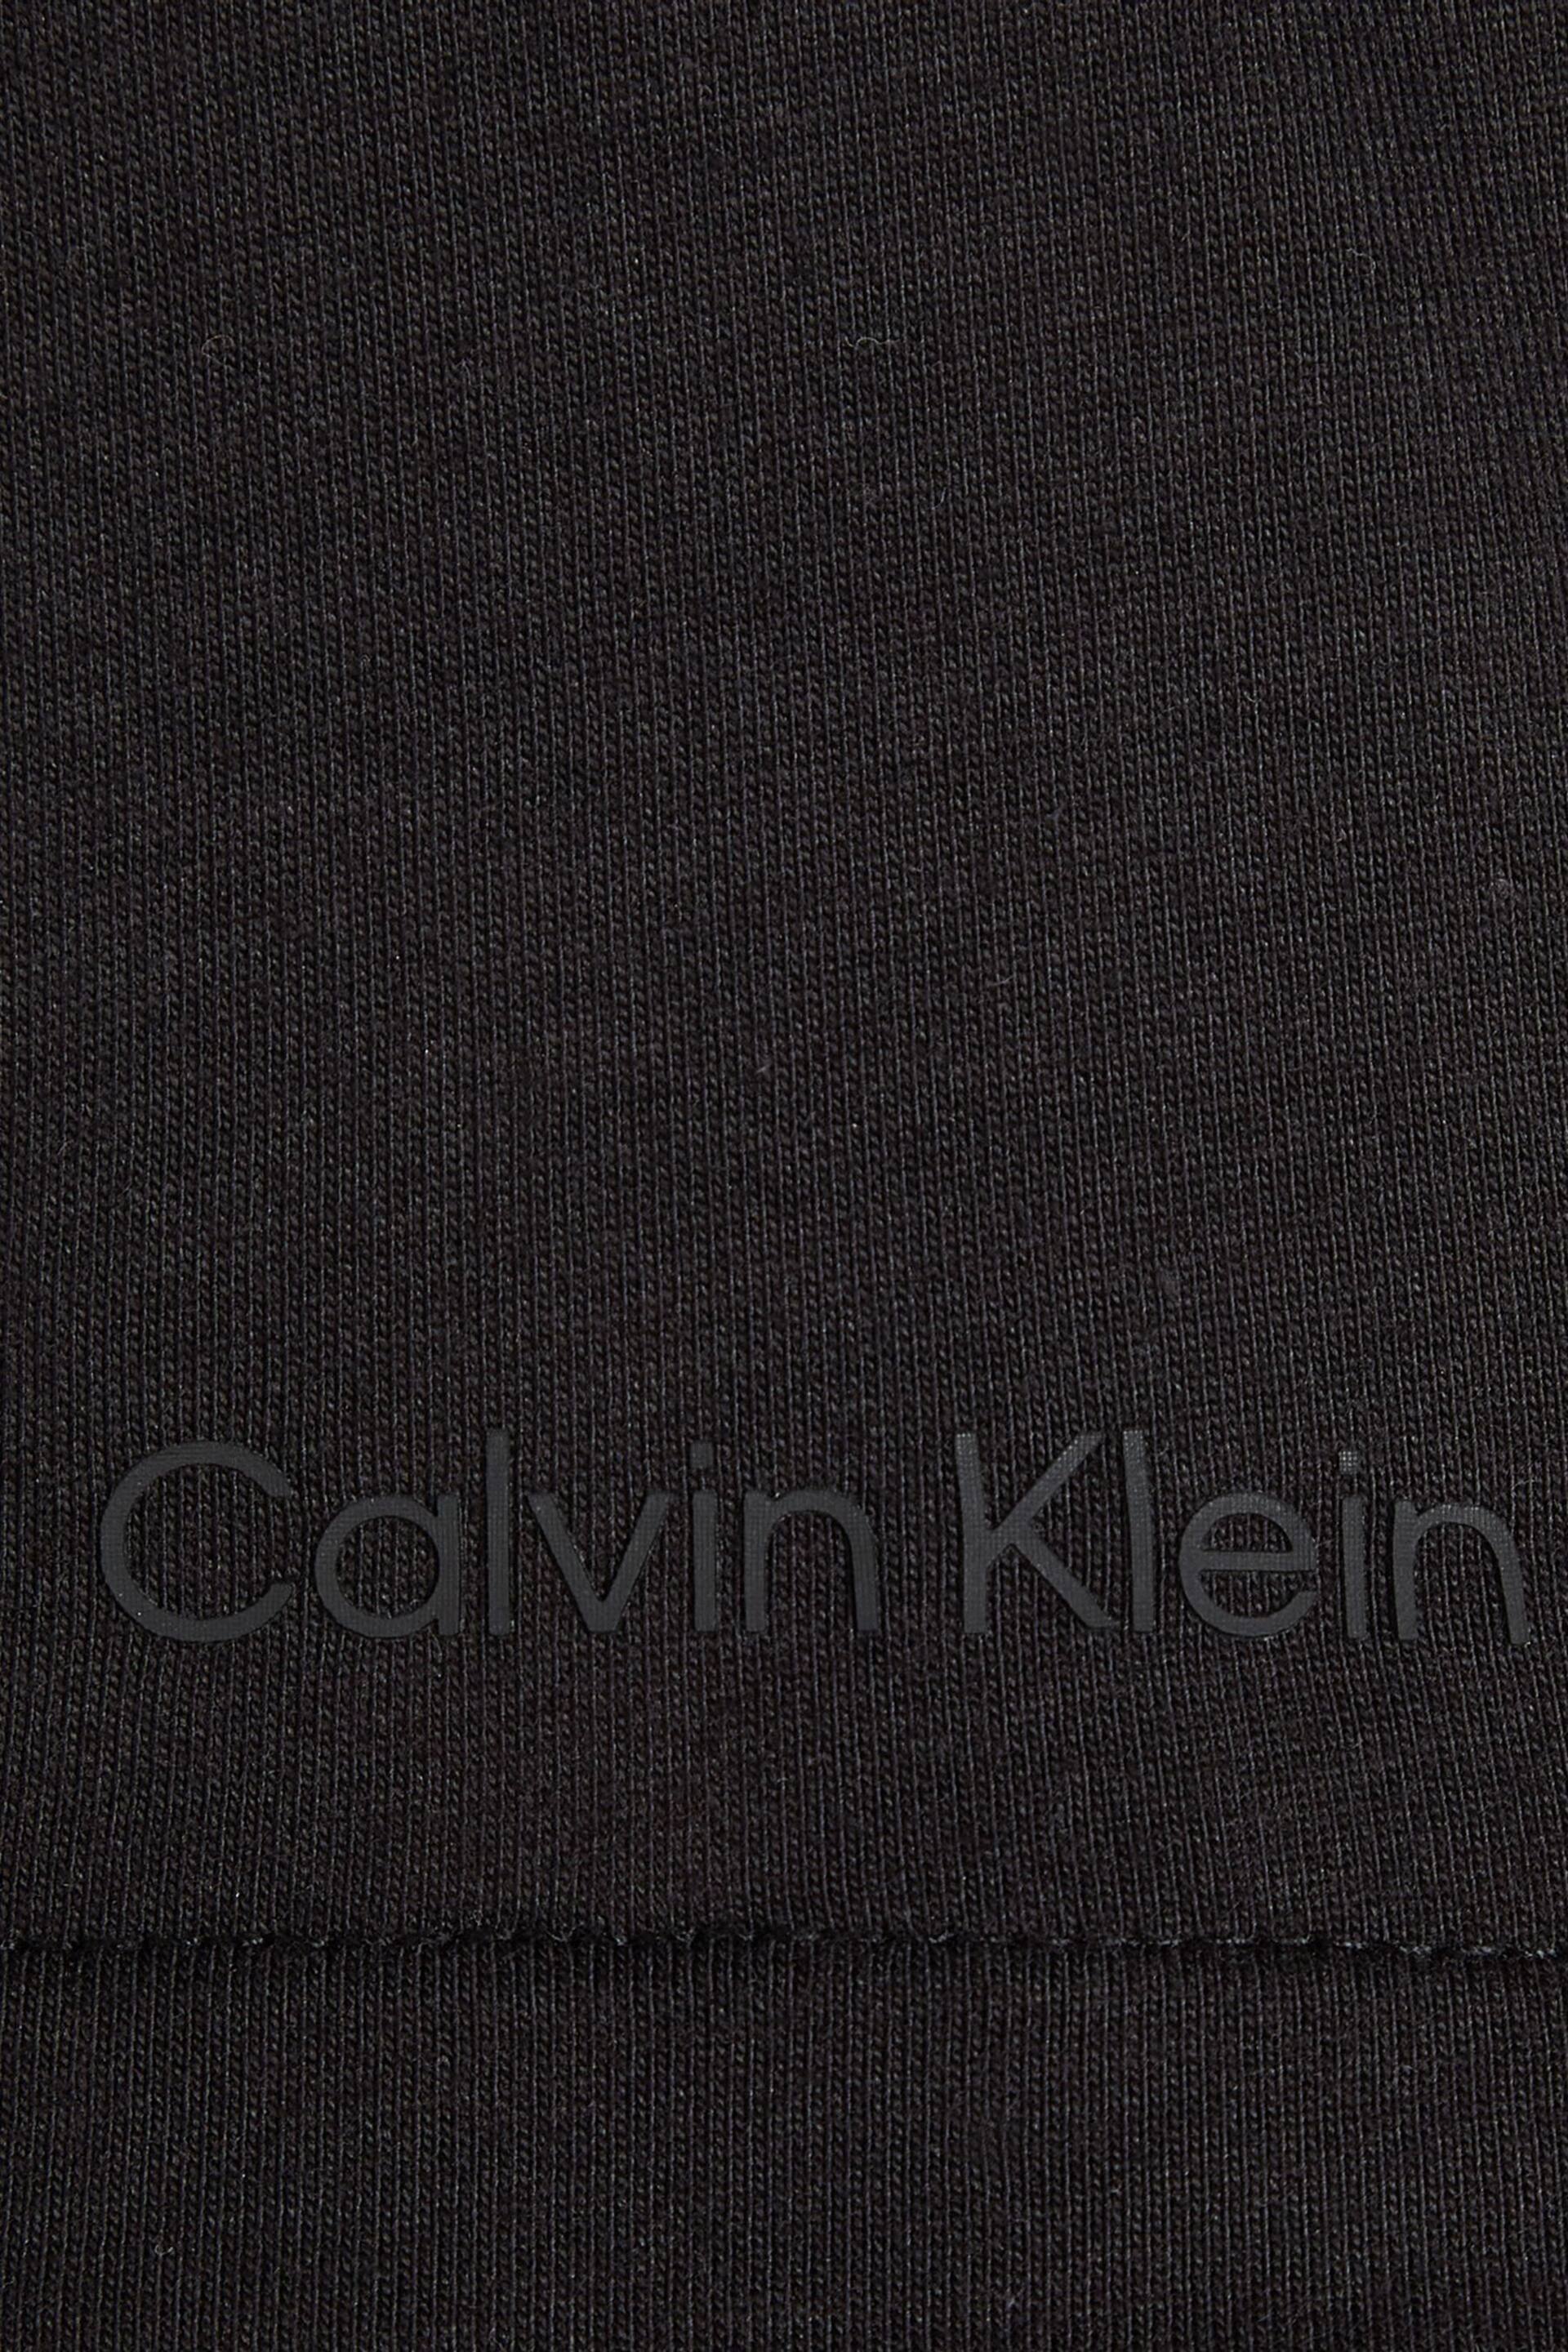 Calvin Klein Black Logo Cuffed Joggers - Image 2 of 2